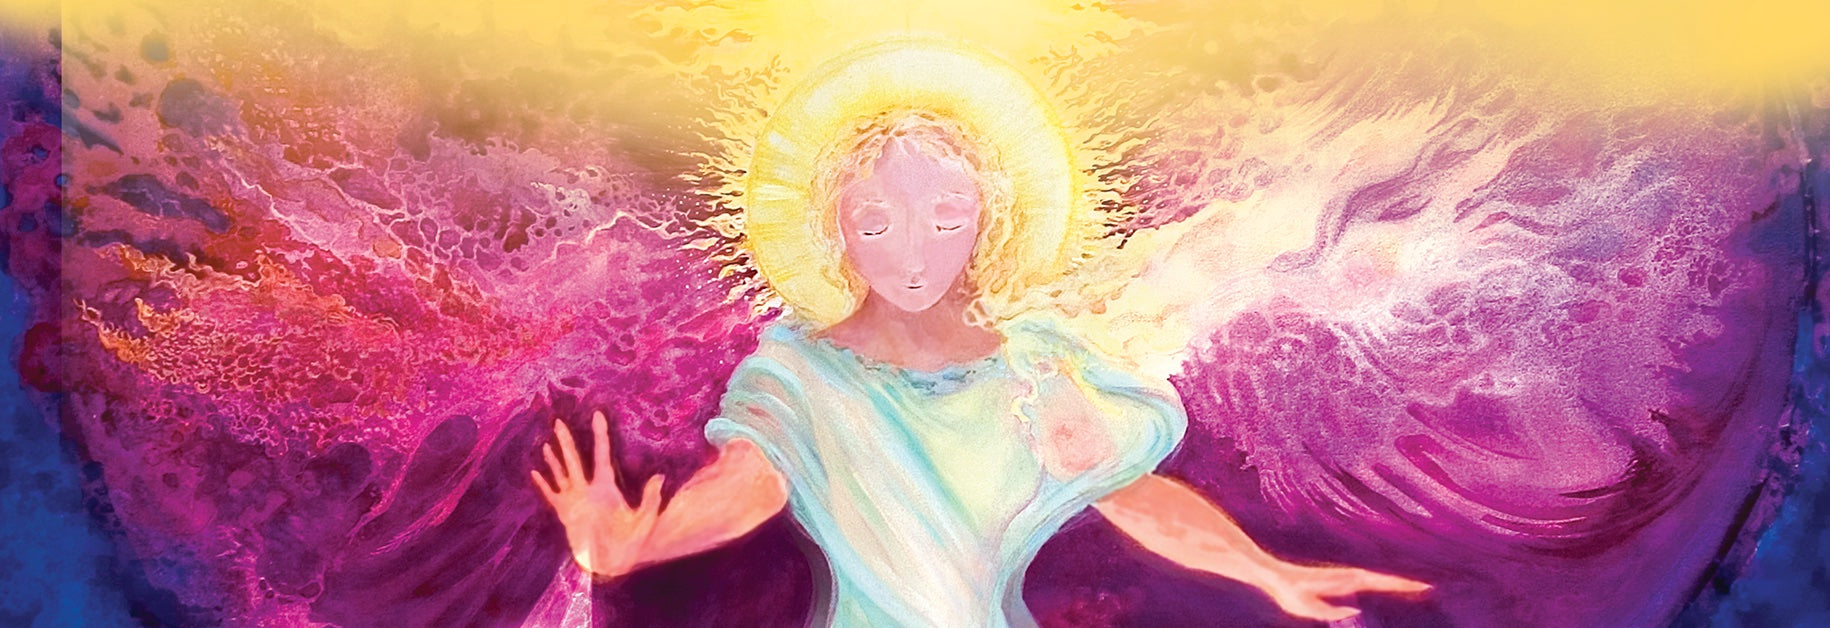 God As Divine Mother by Paramhansa Yogananda 